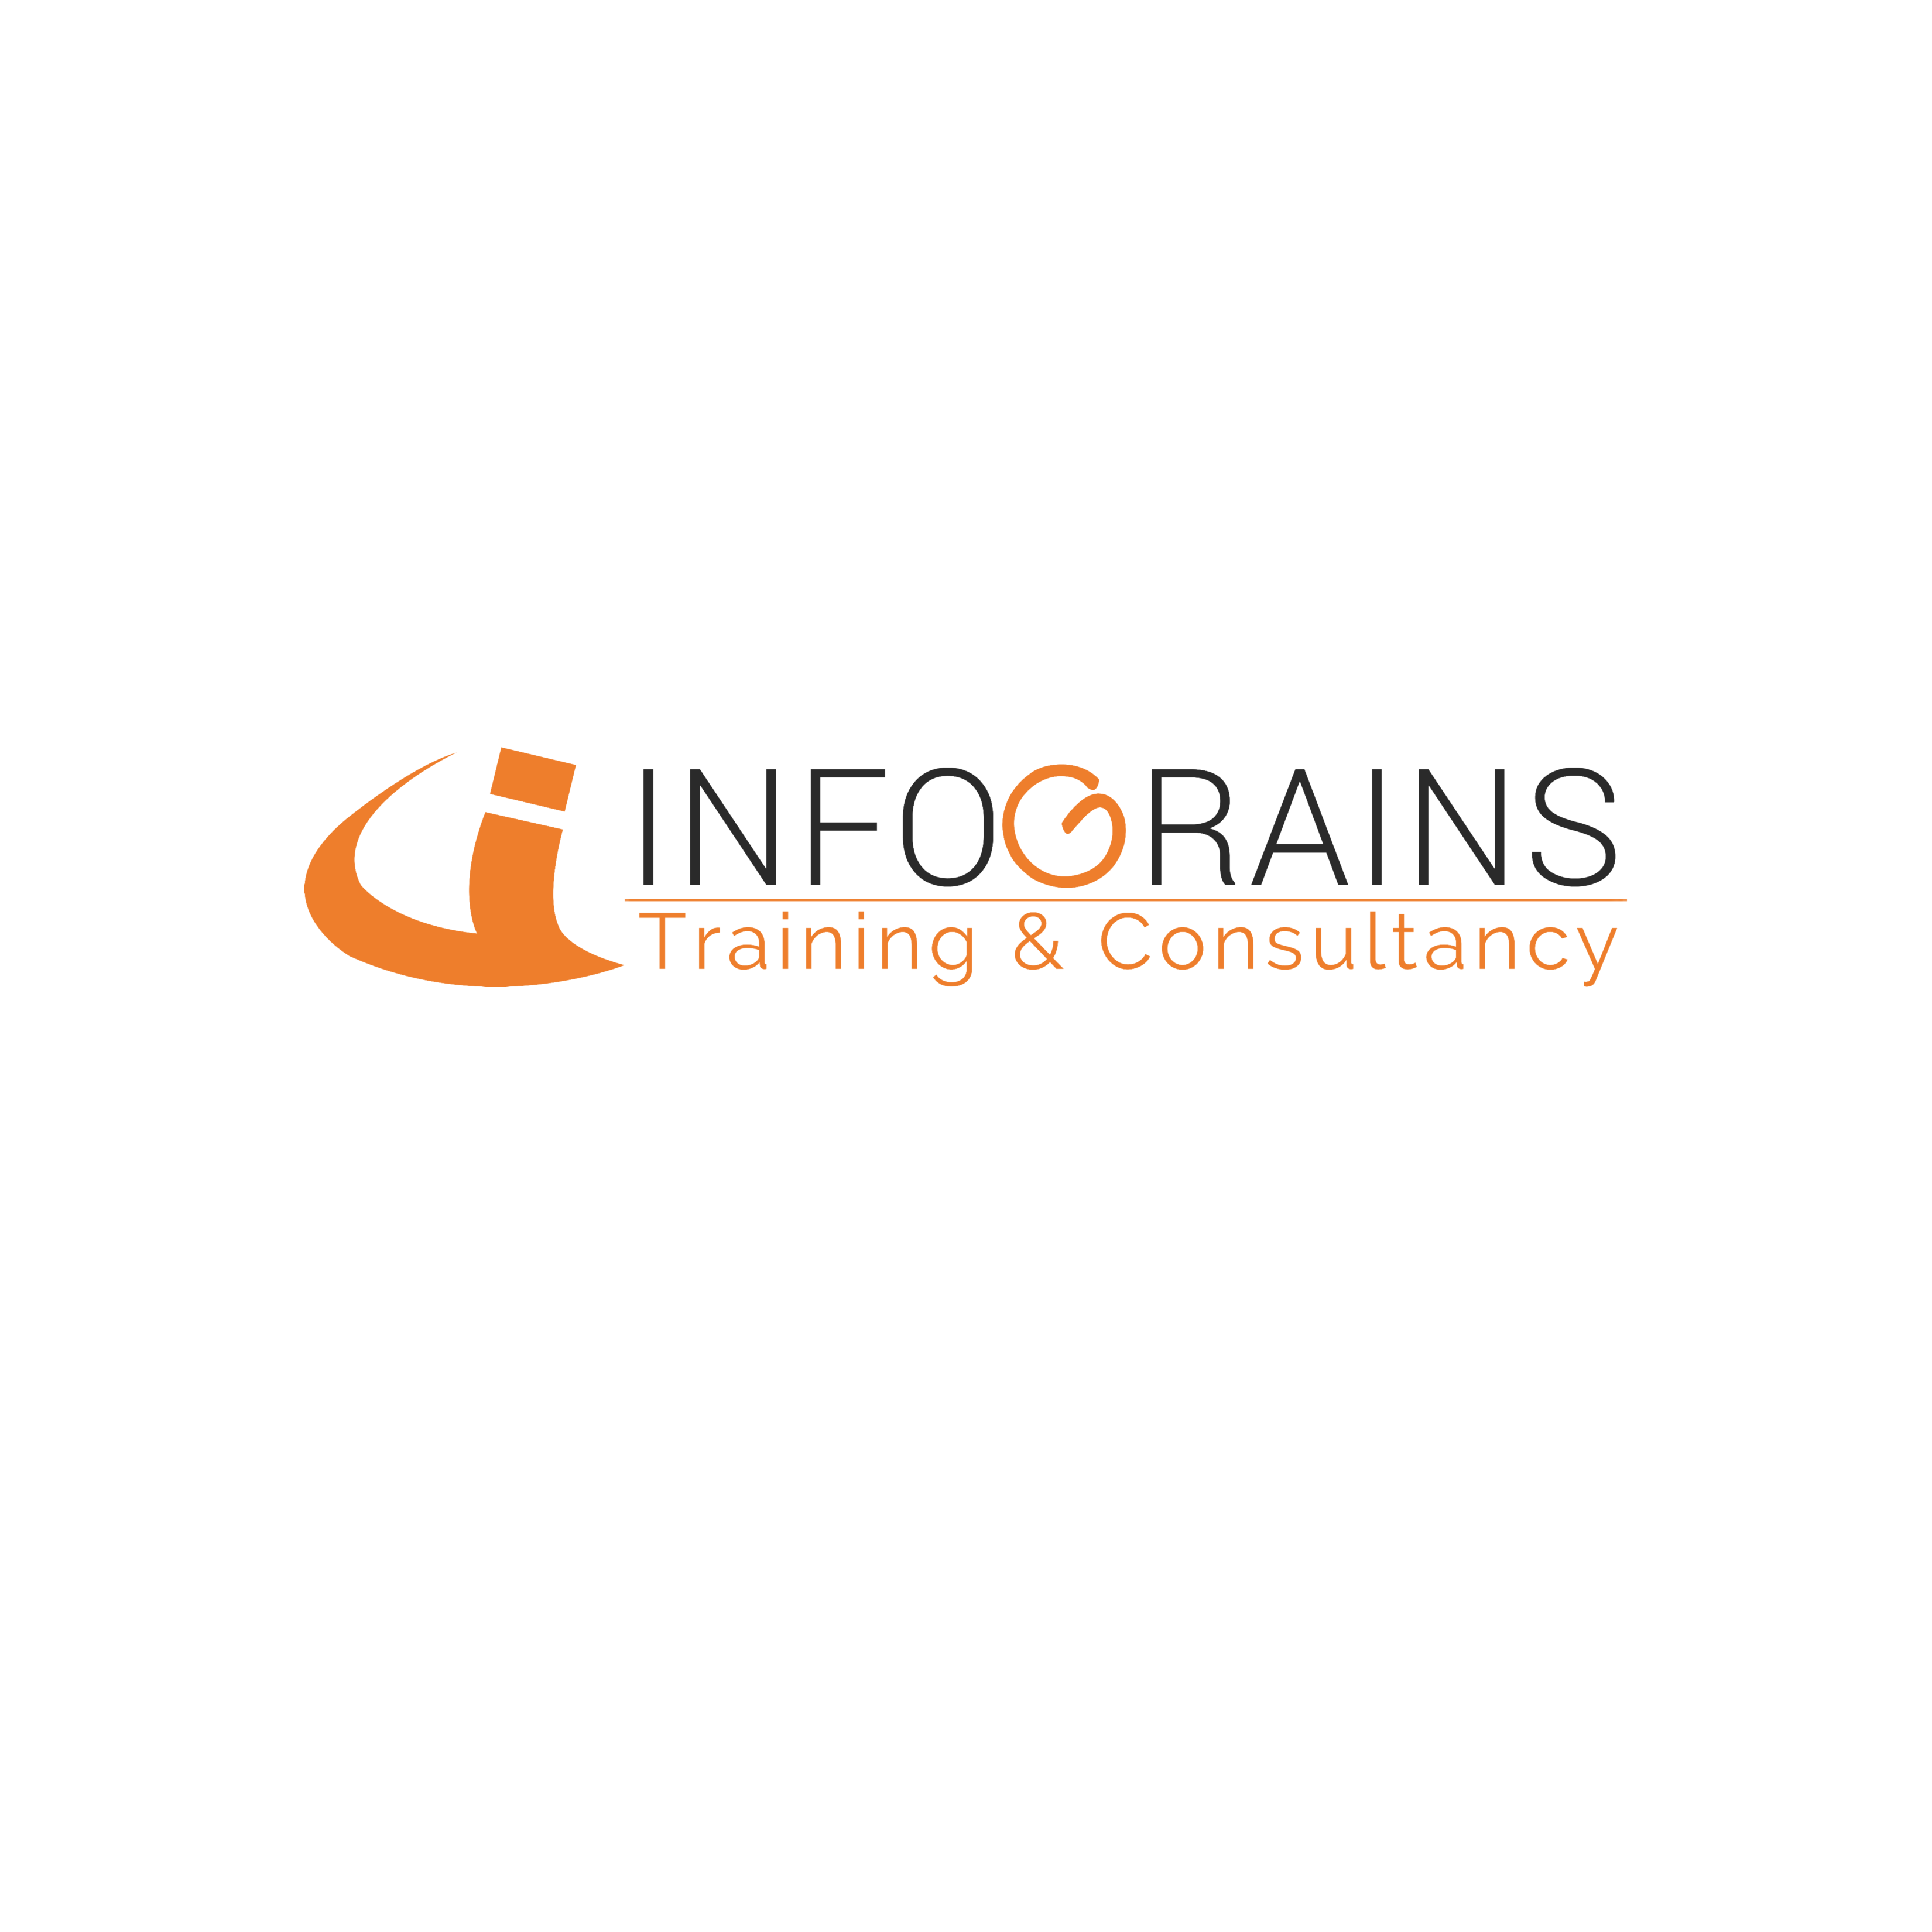 Infograins Training & Consultancy